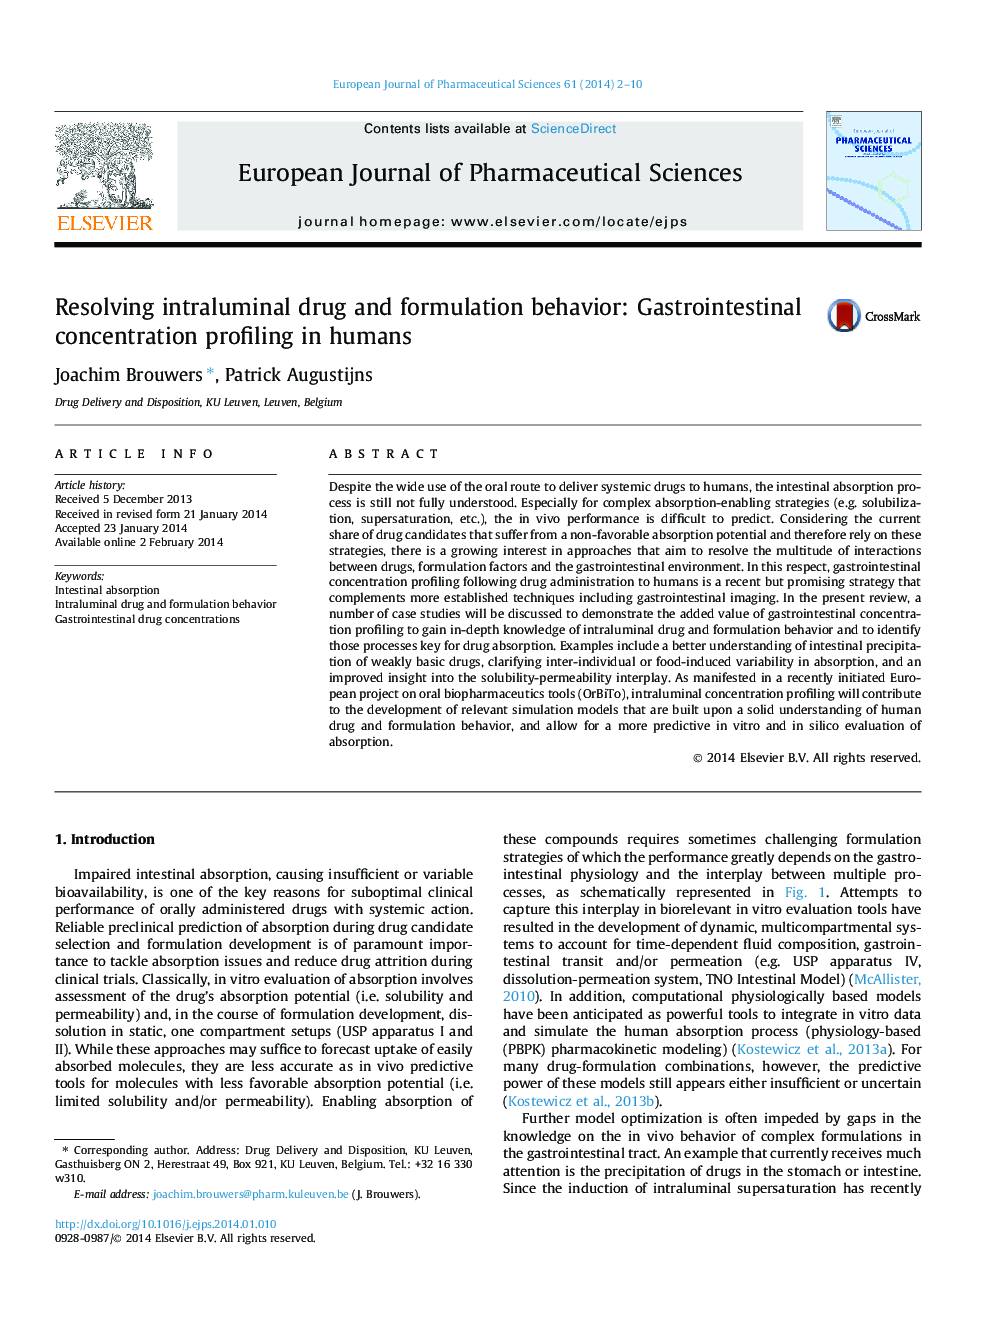 Resolving intraluminal drug and formulation behavior: Gastrointestinal concentration profiling in humans